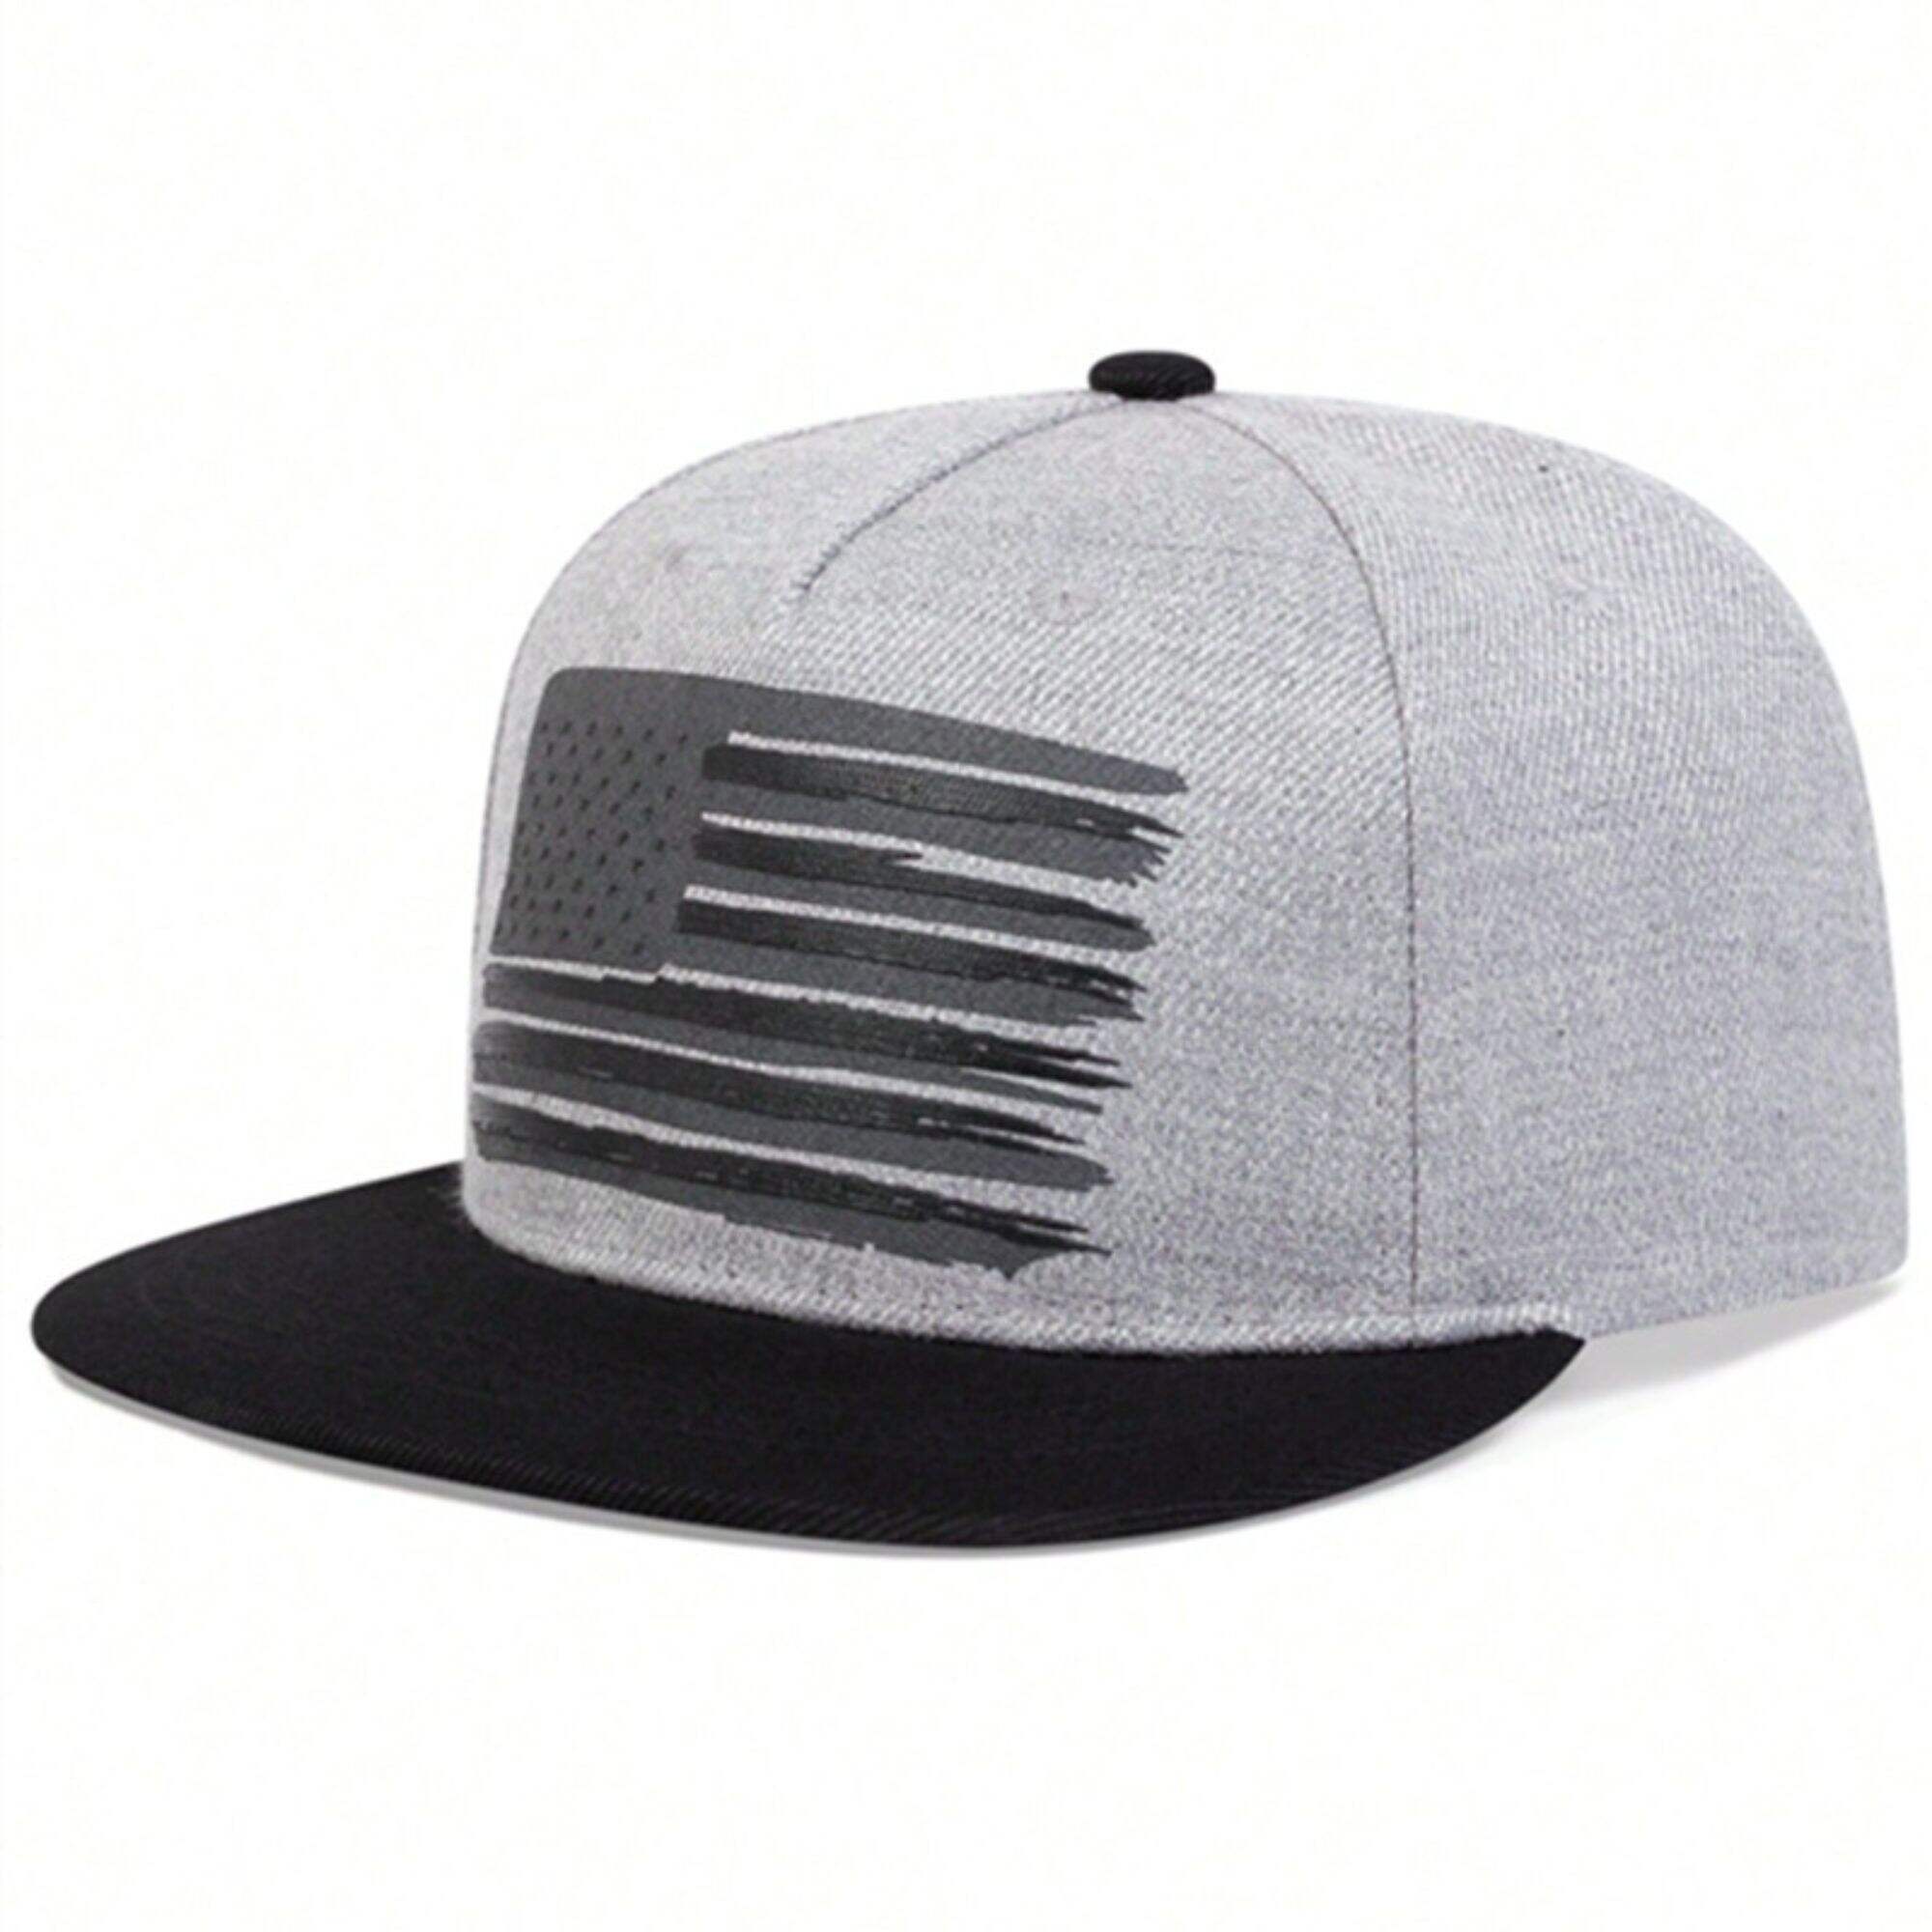 American logo flat brim hat